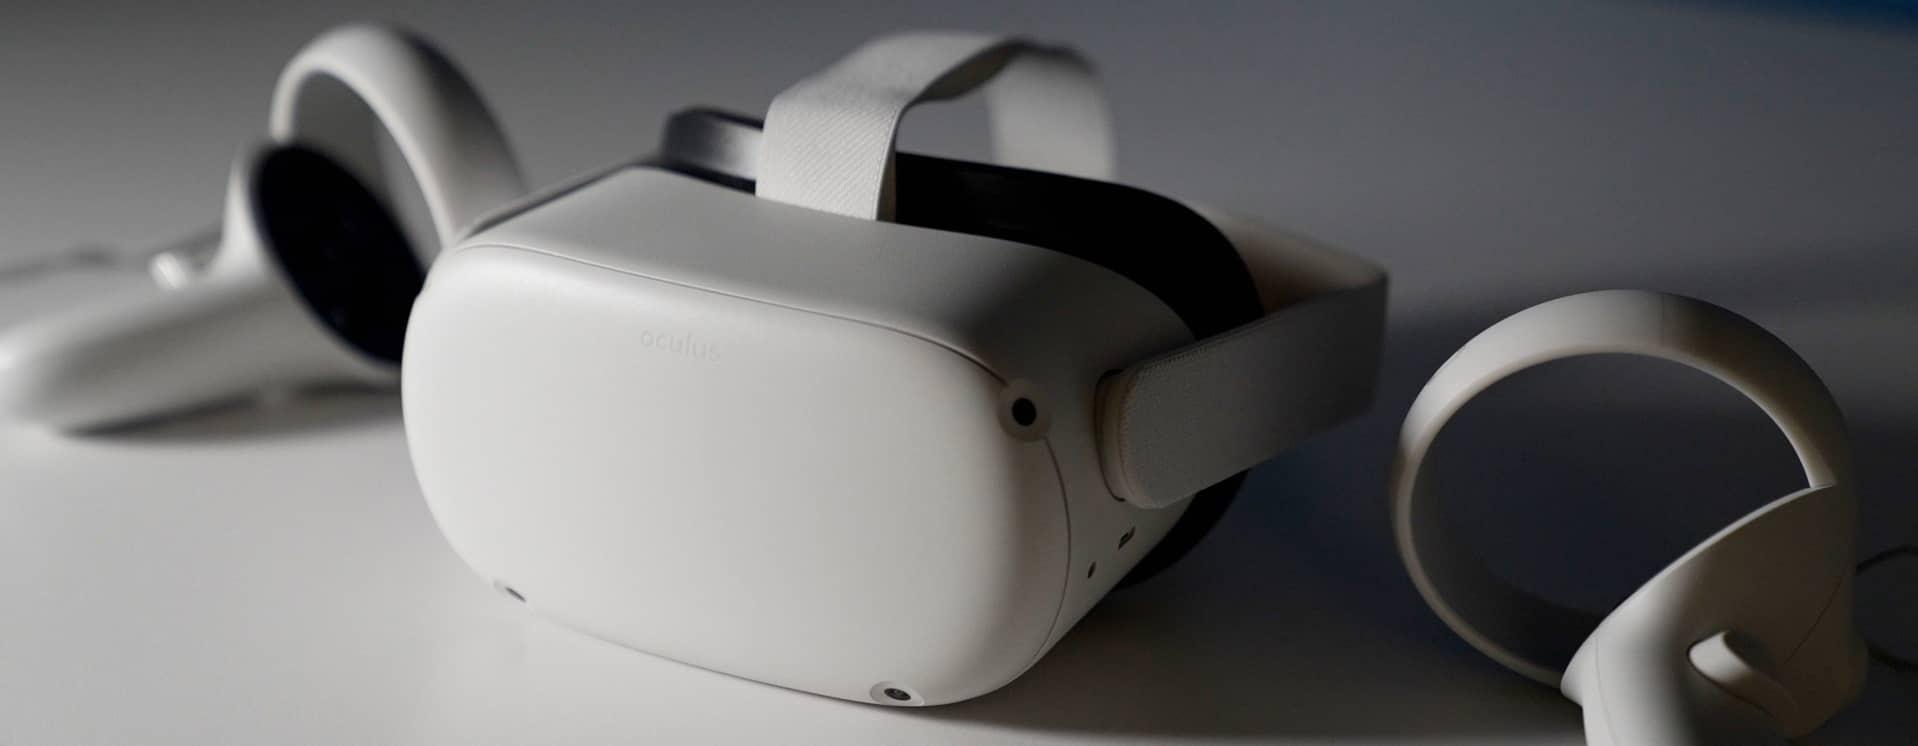 vr headset minimalist facebook oculus with hand controls on white table dark room minimalist background